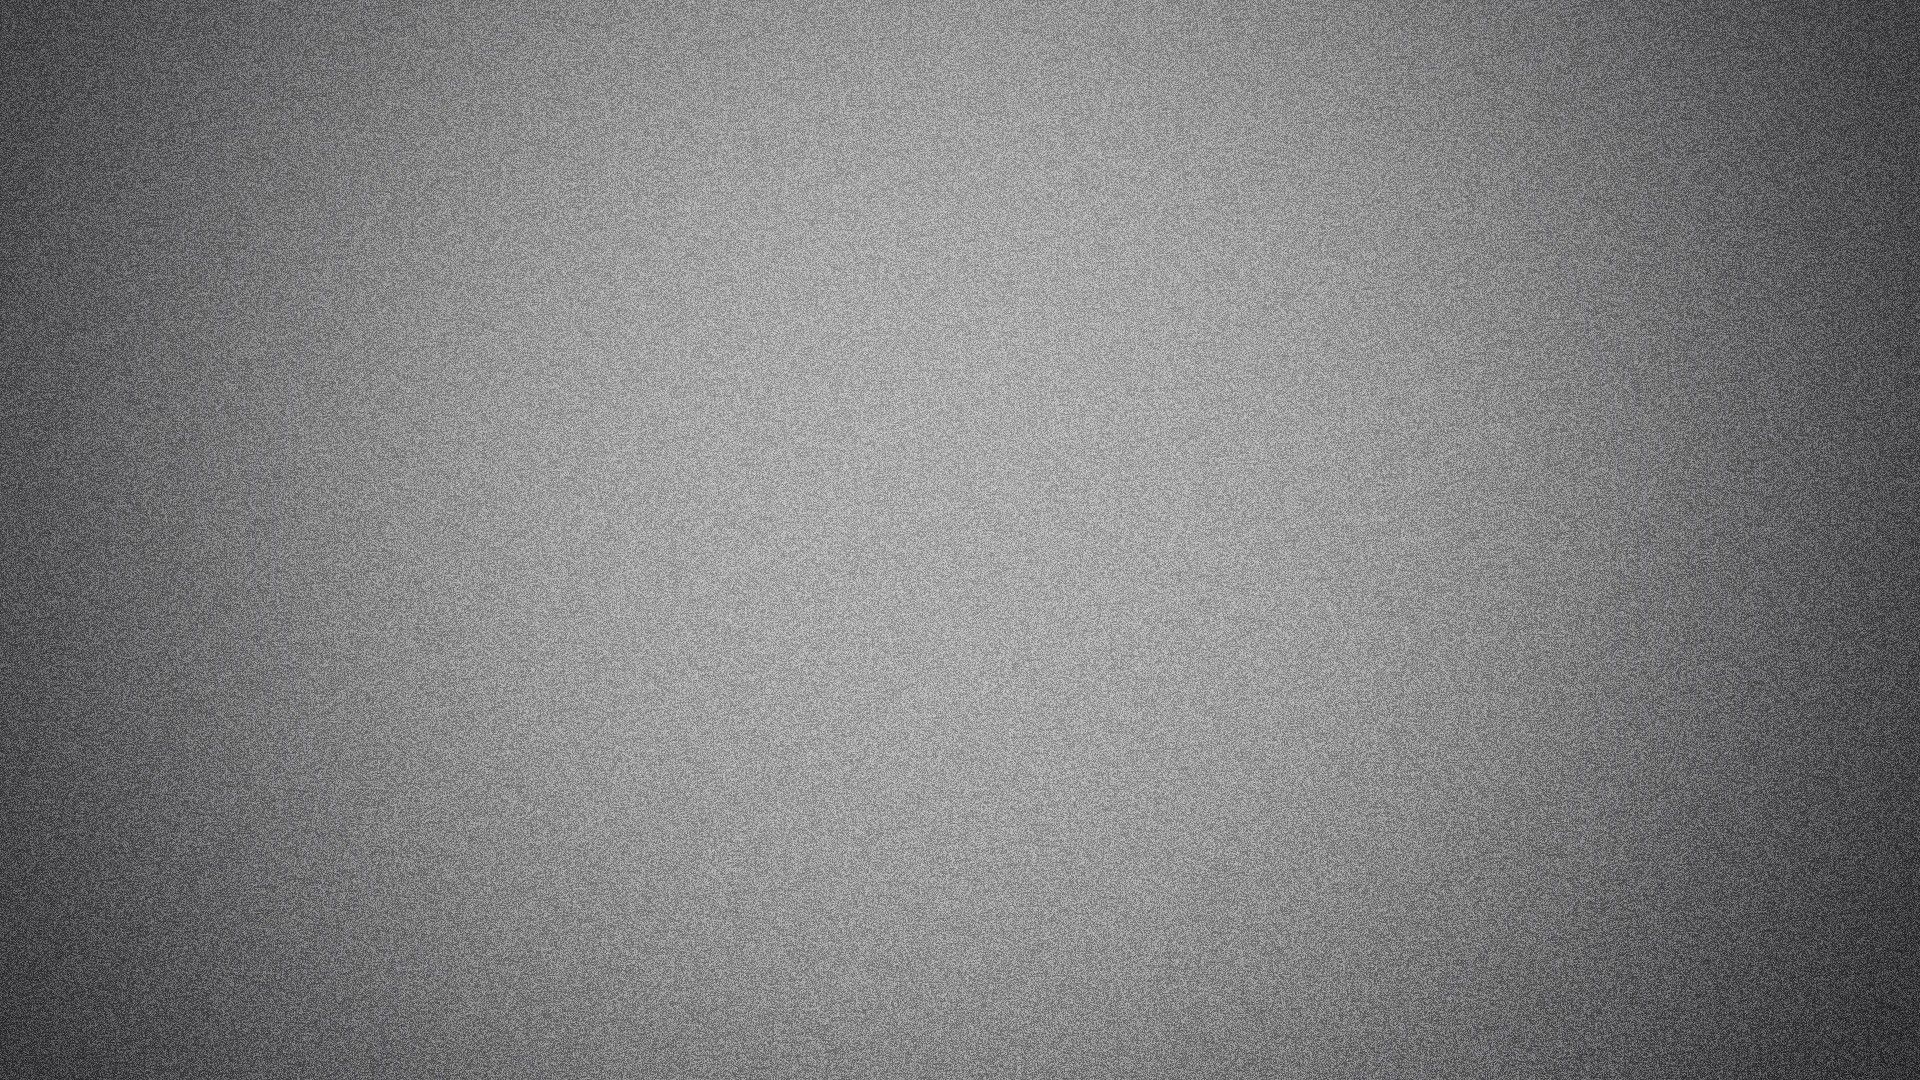 1920x1080 Grey Background Free Download Cool Image Amazing Artwork